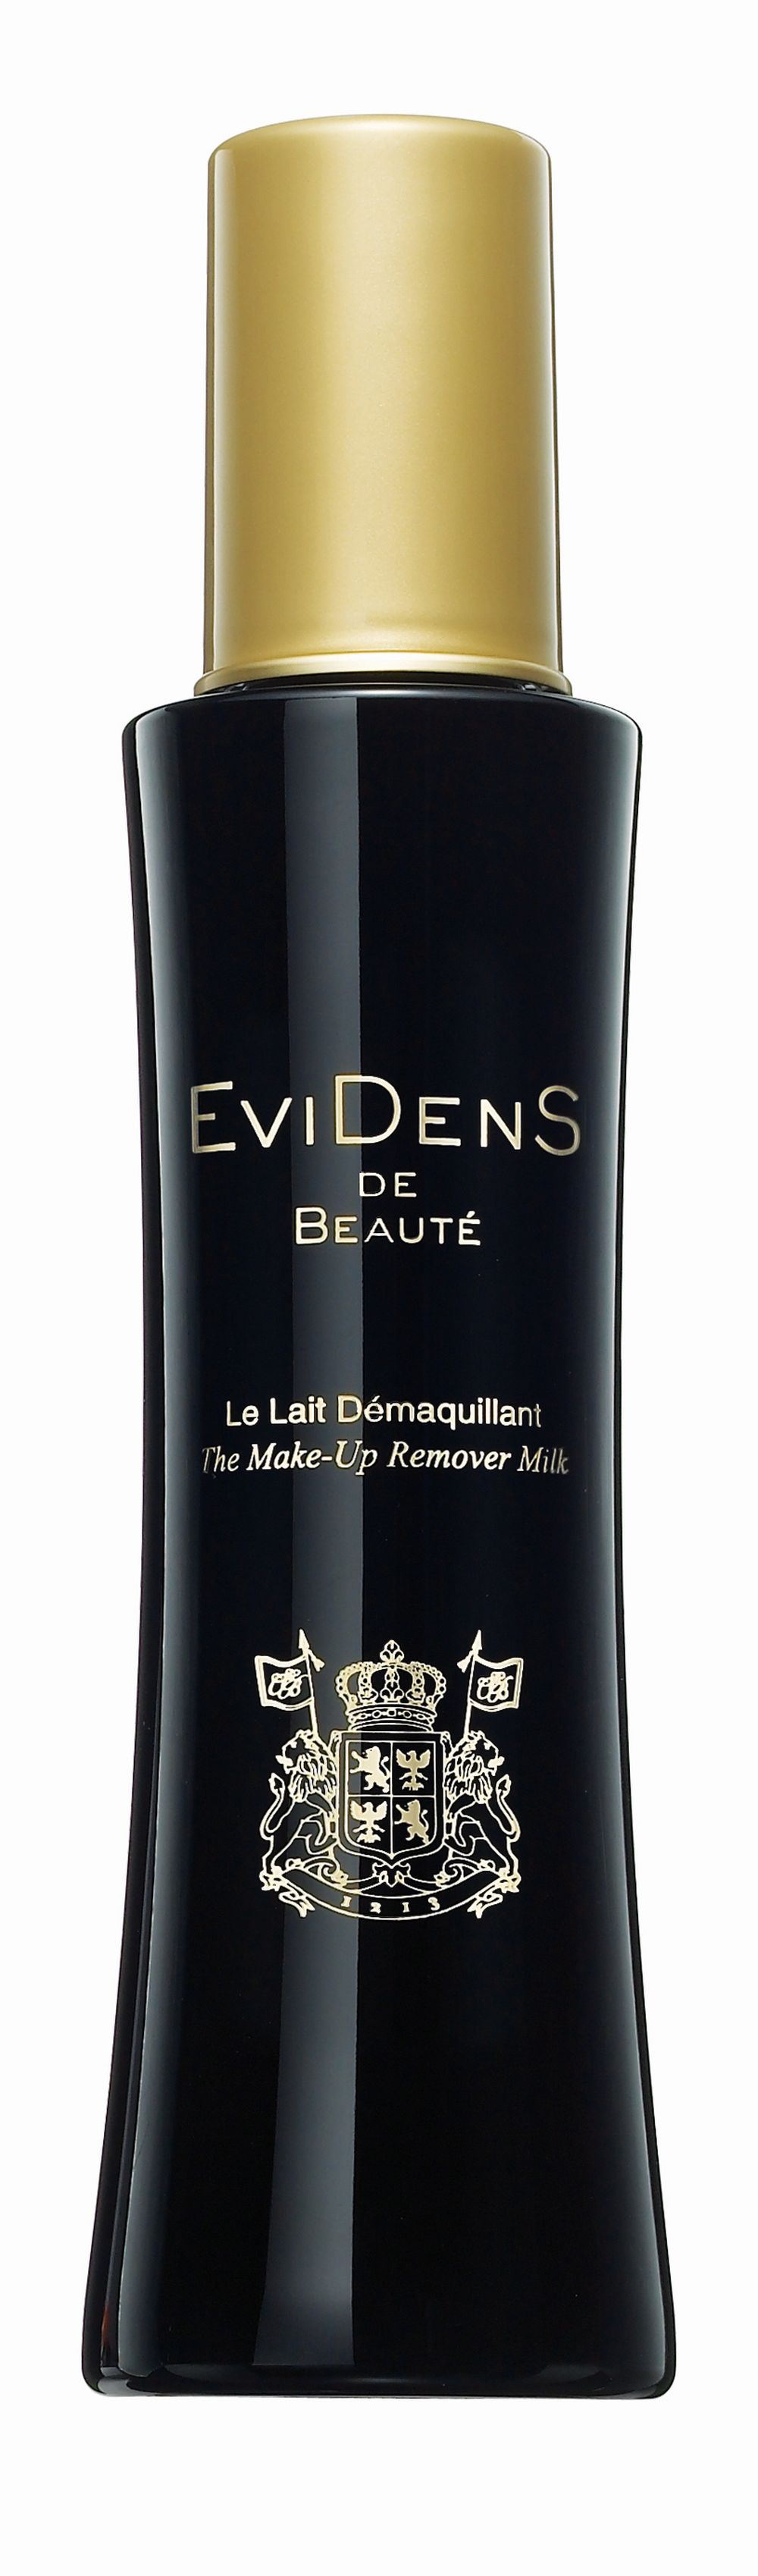 Evidens de Beauté - Make-up Remover Milk - 200 ml